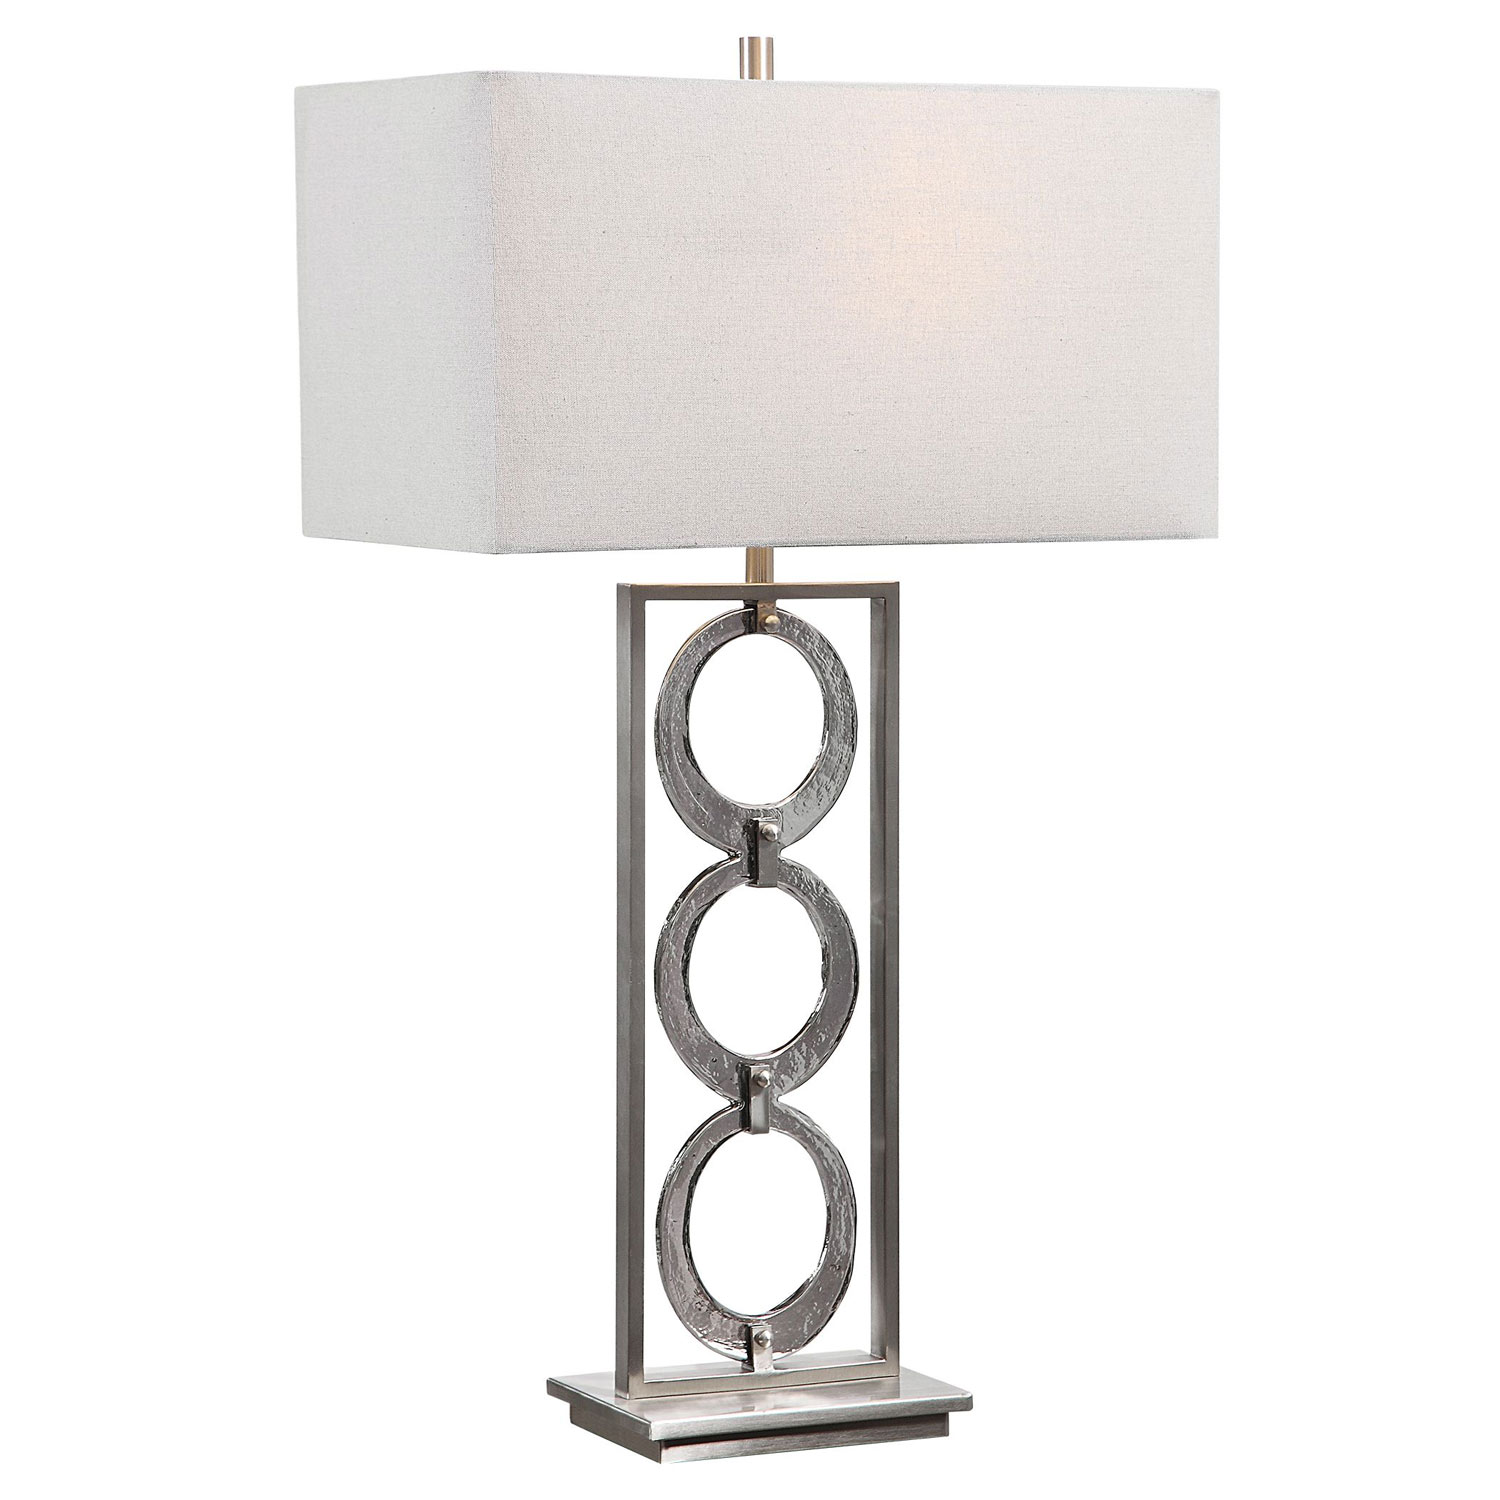 Uttermost Perrin Table Lamp - Nickel